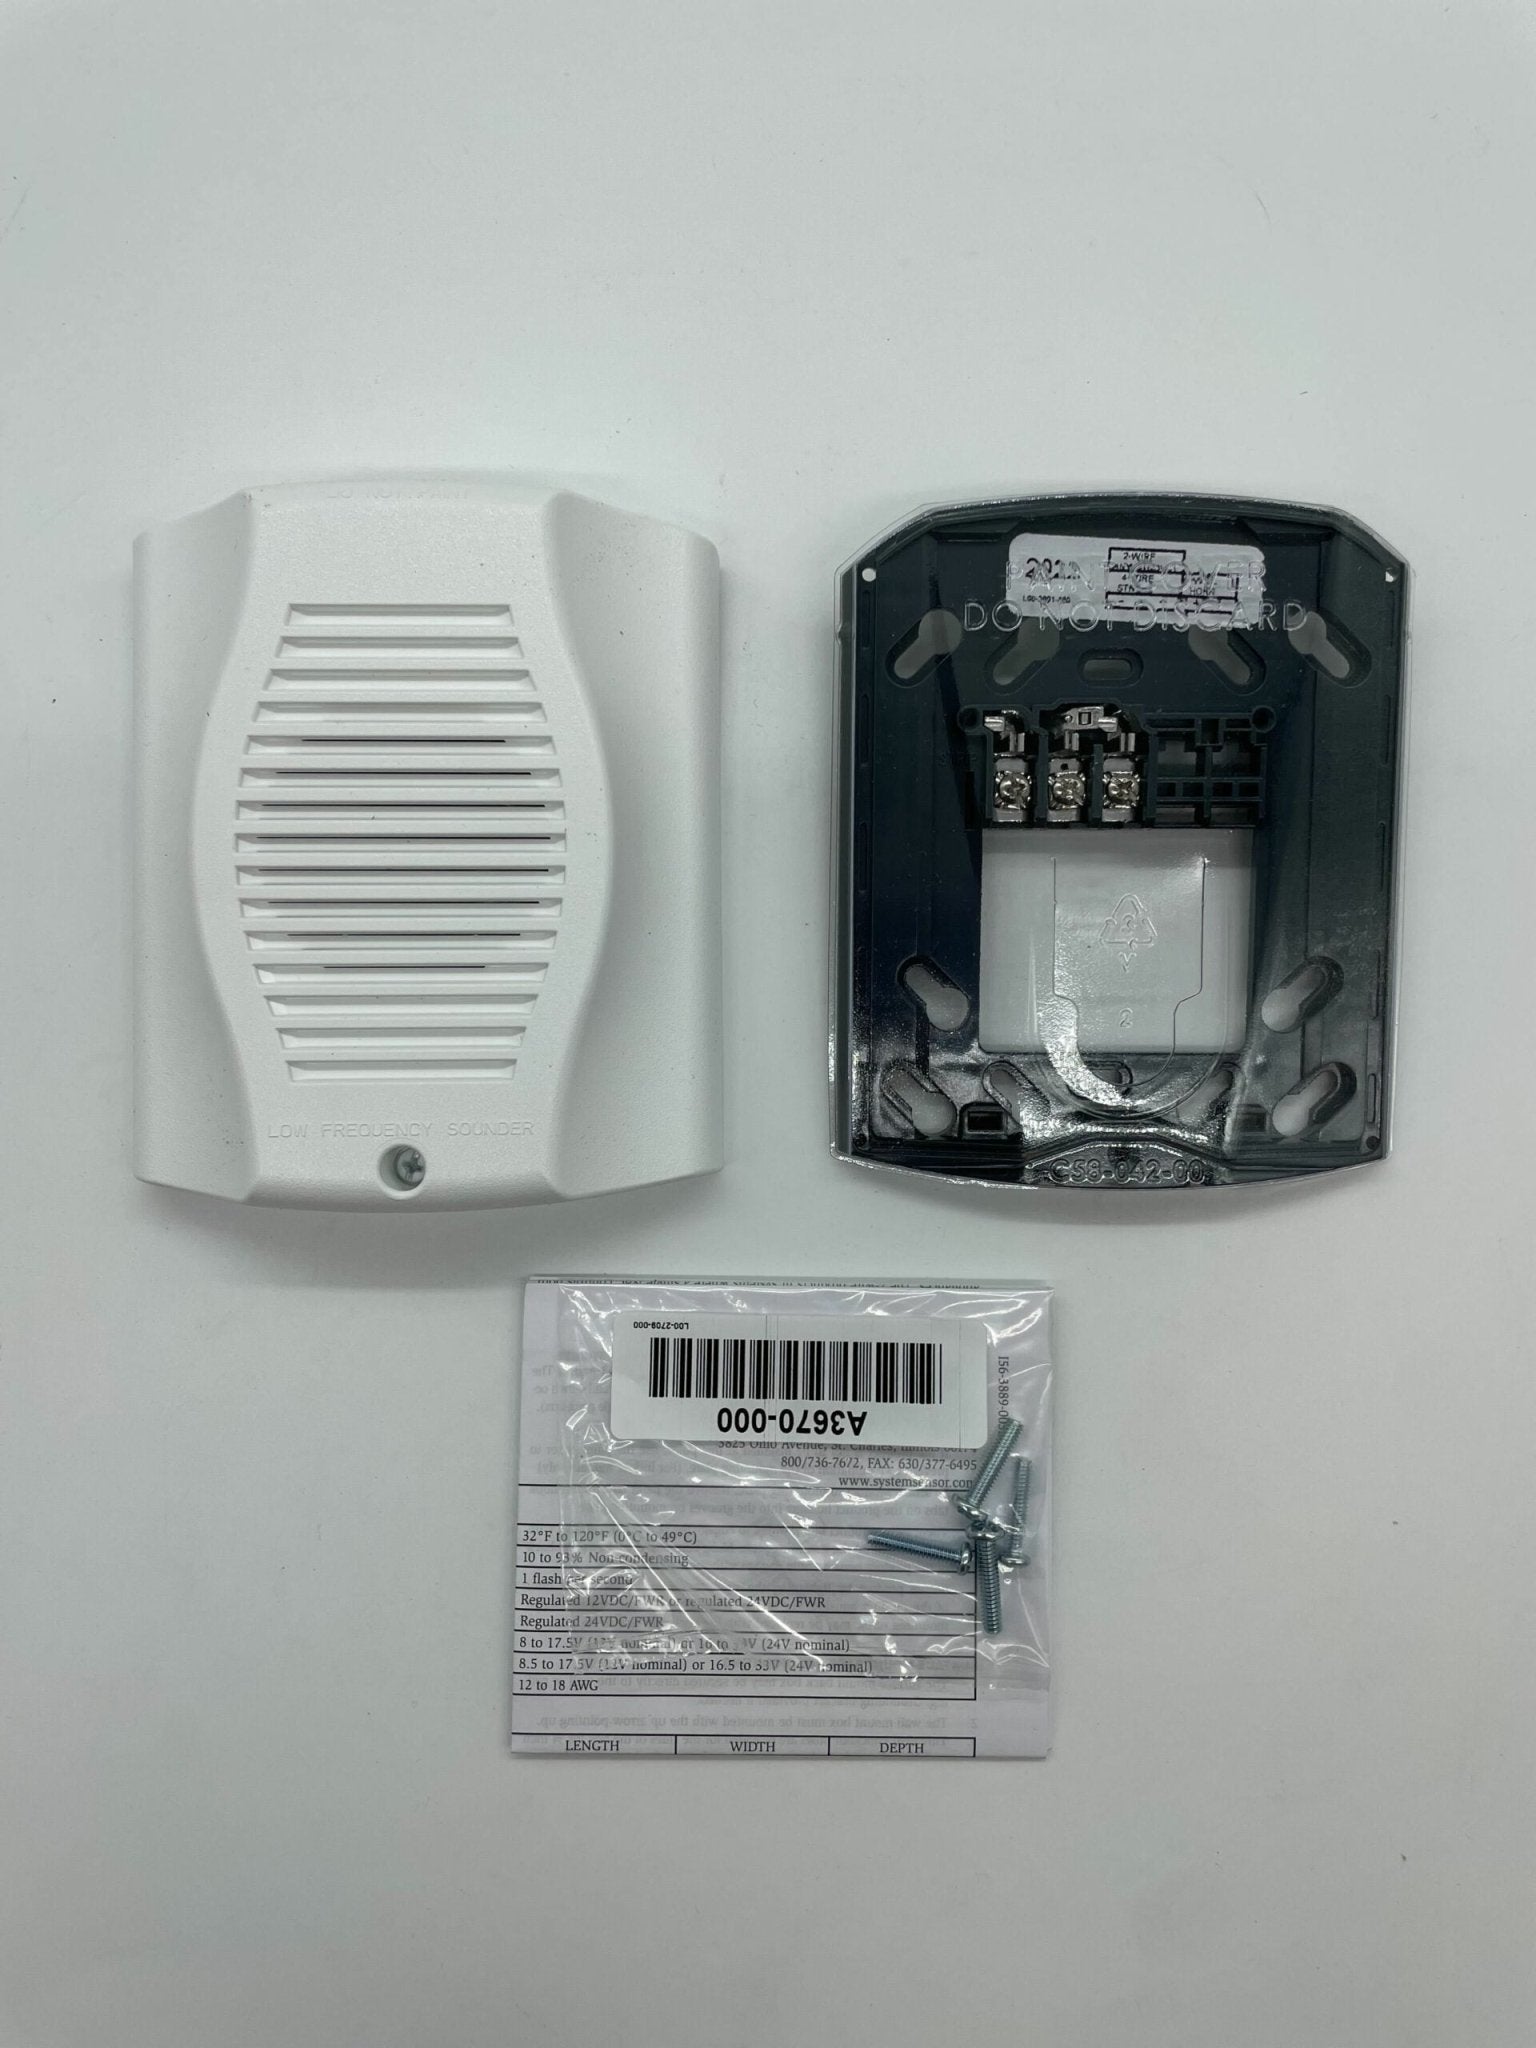 System Sensor HW-LF - The Fire Alarm Supplier